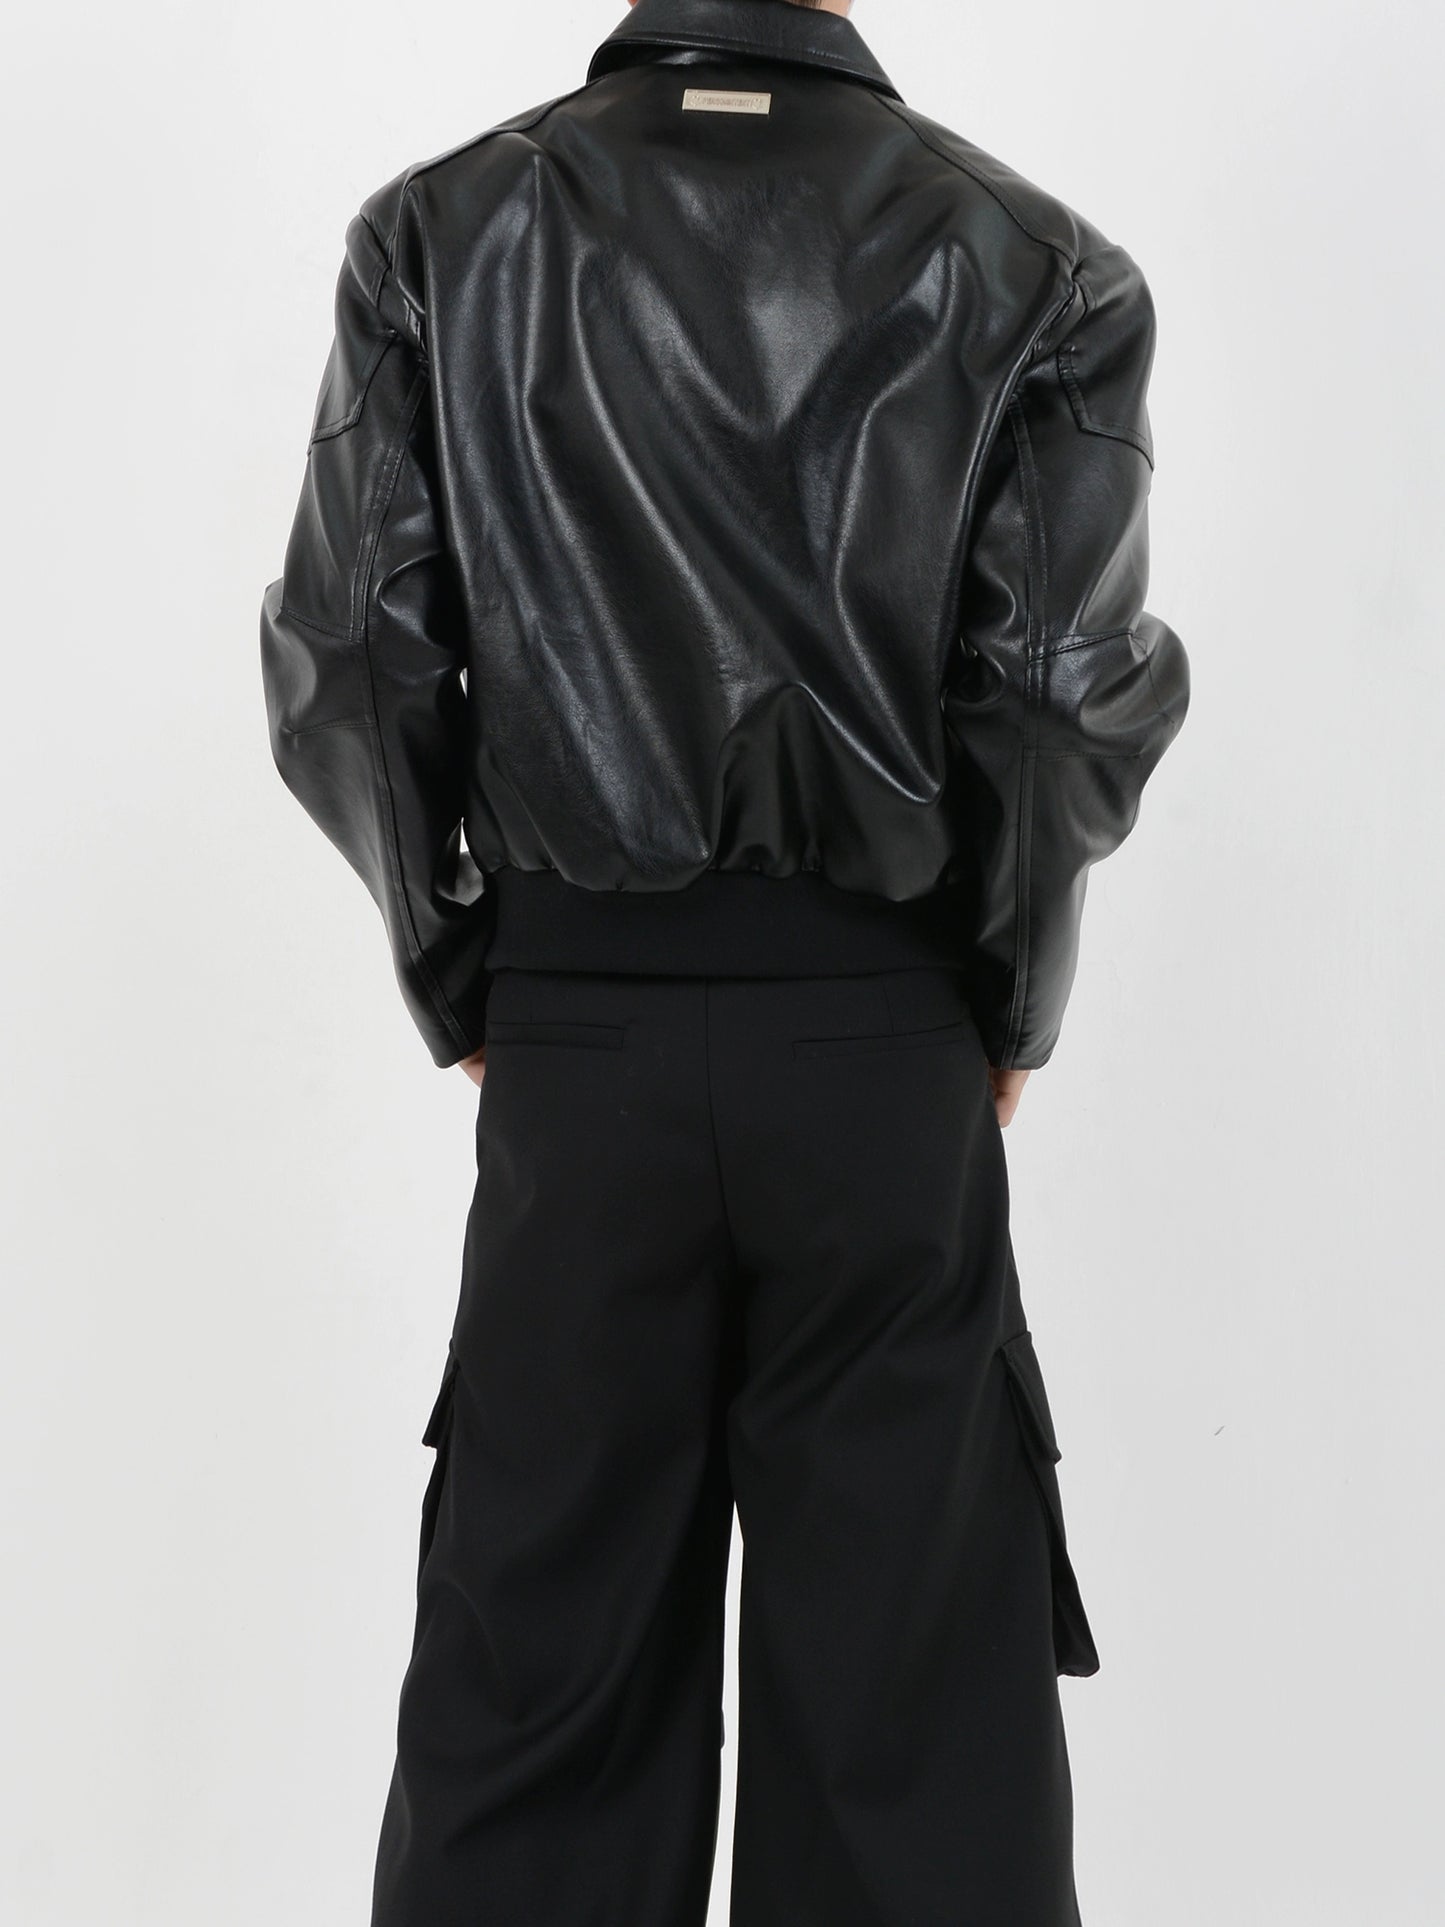 LUCE GARMENT Niche Design Sense Metal Zipper Cropped Leather Jacket Men's Retro Biker Jacket Trend